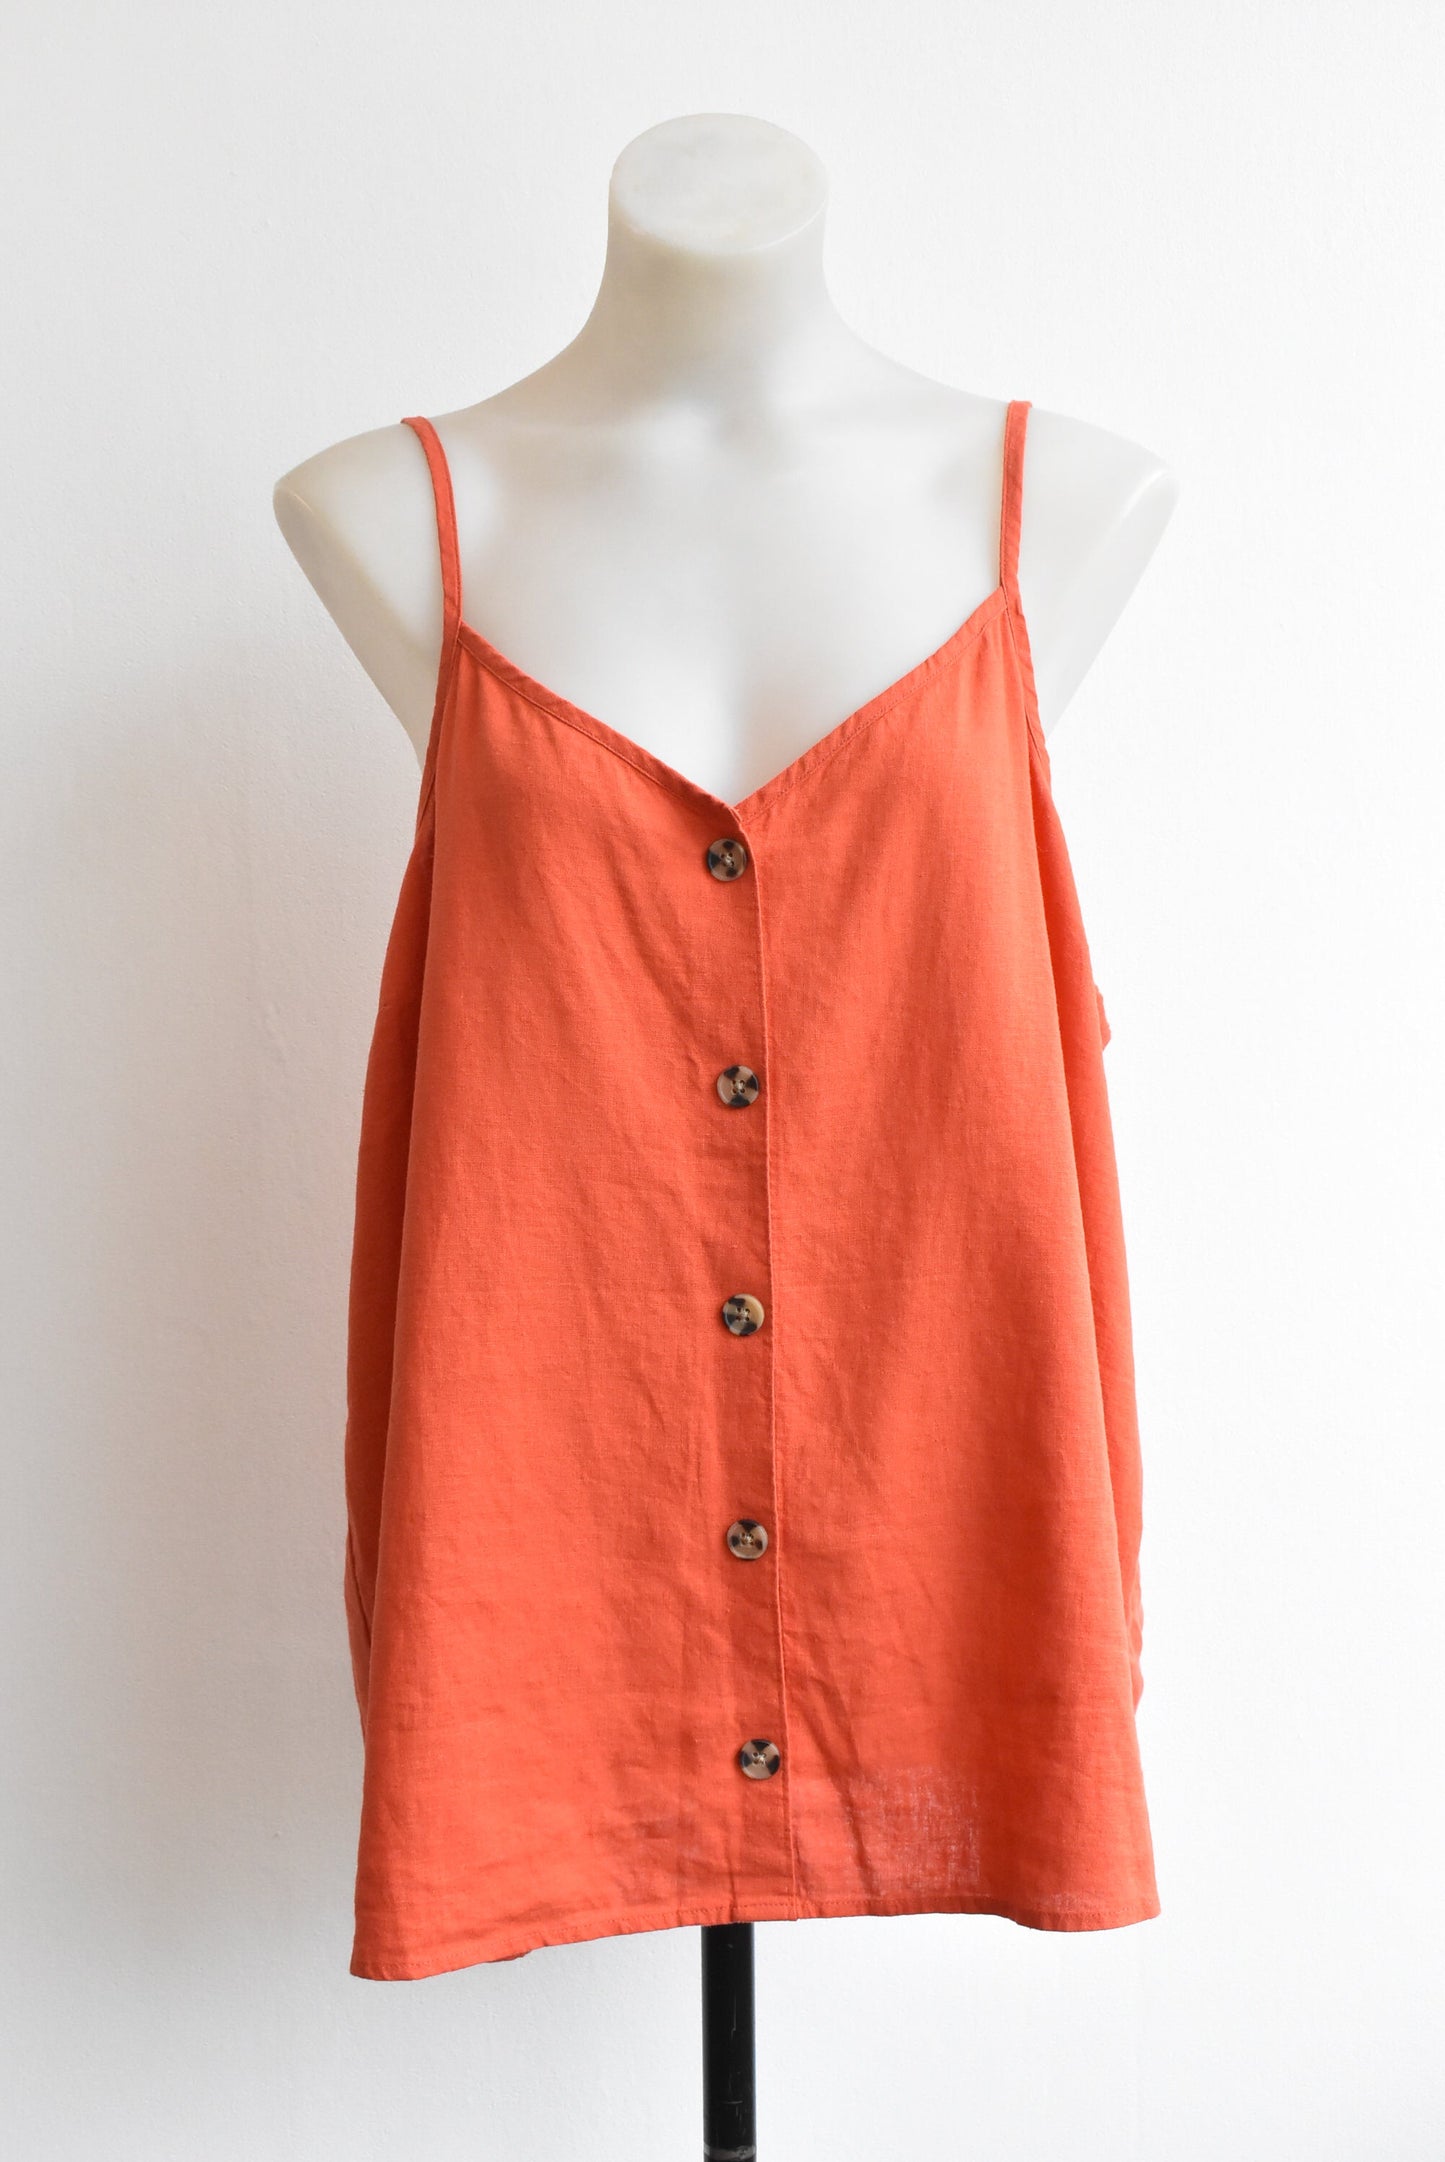 H&H orange sleeveless top NEW, size 20